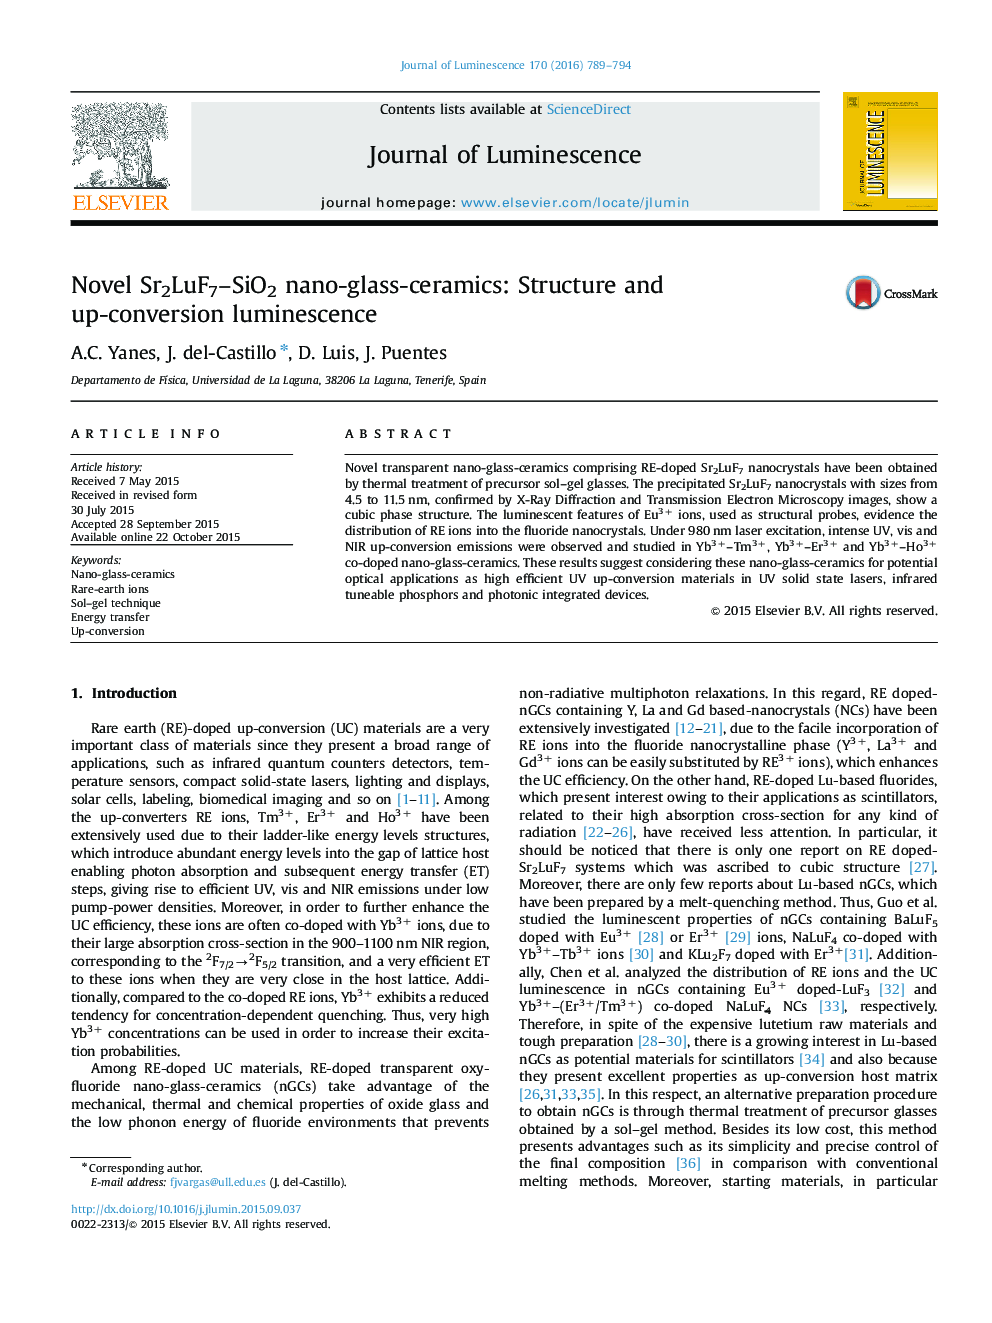 Novel Sr2LuF7-SiO2 nano-glass-ceramics: Structure and up-conversion luminescence